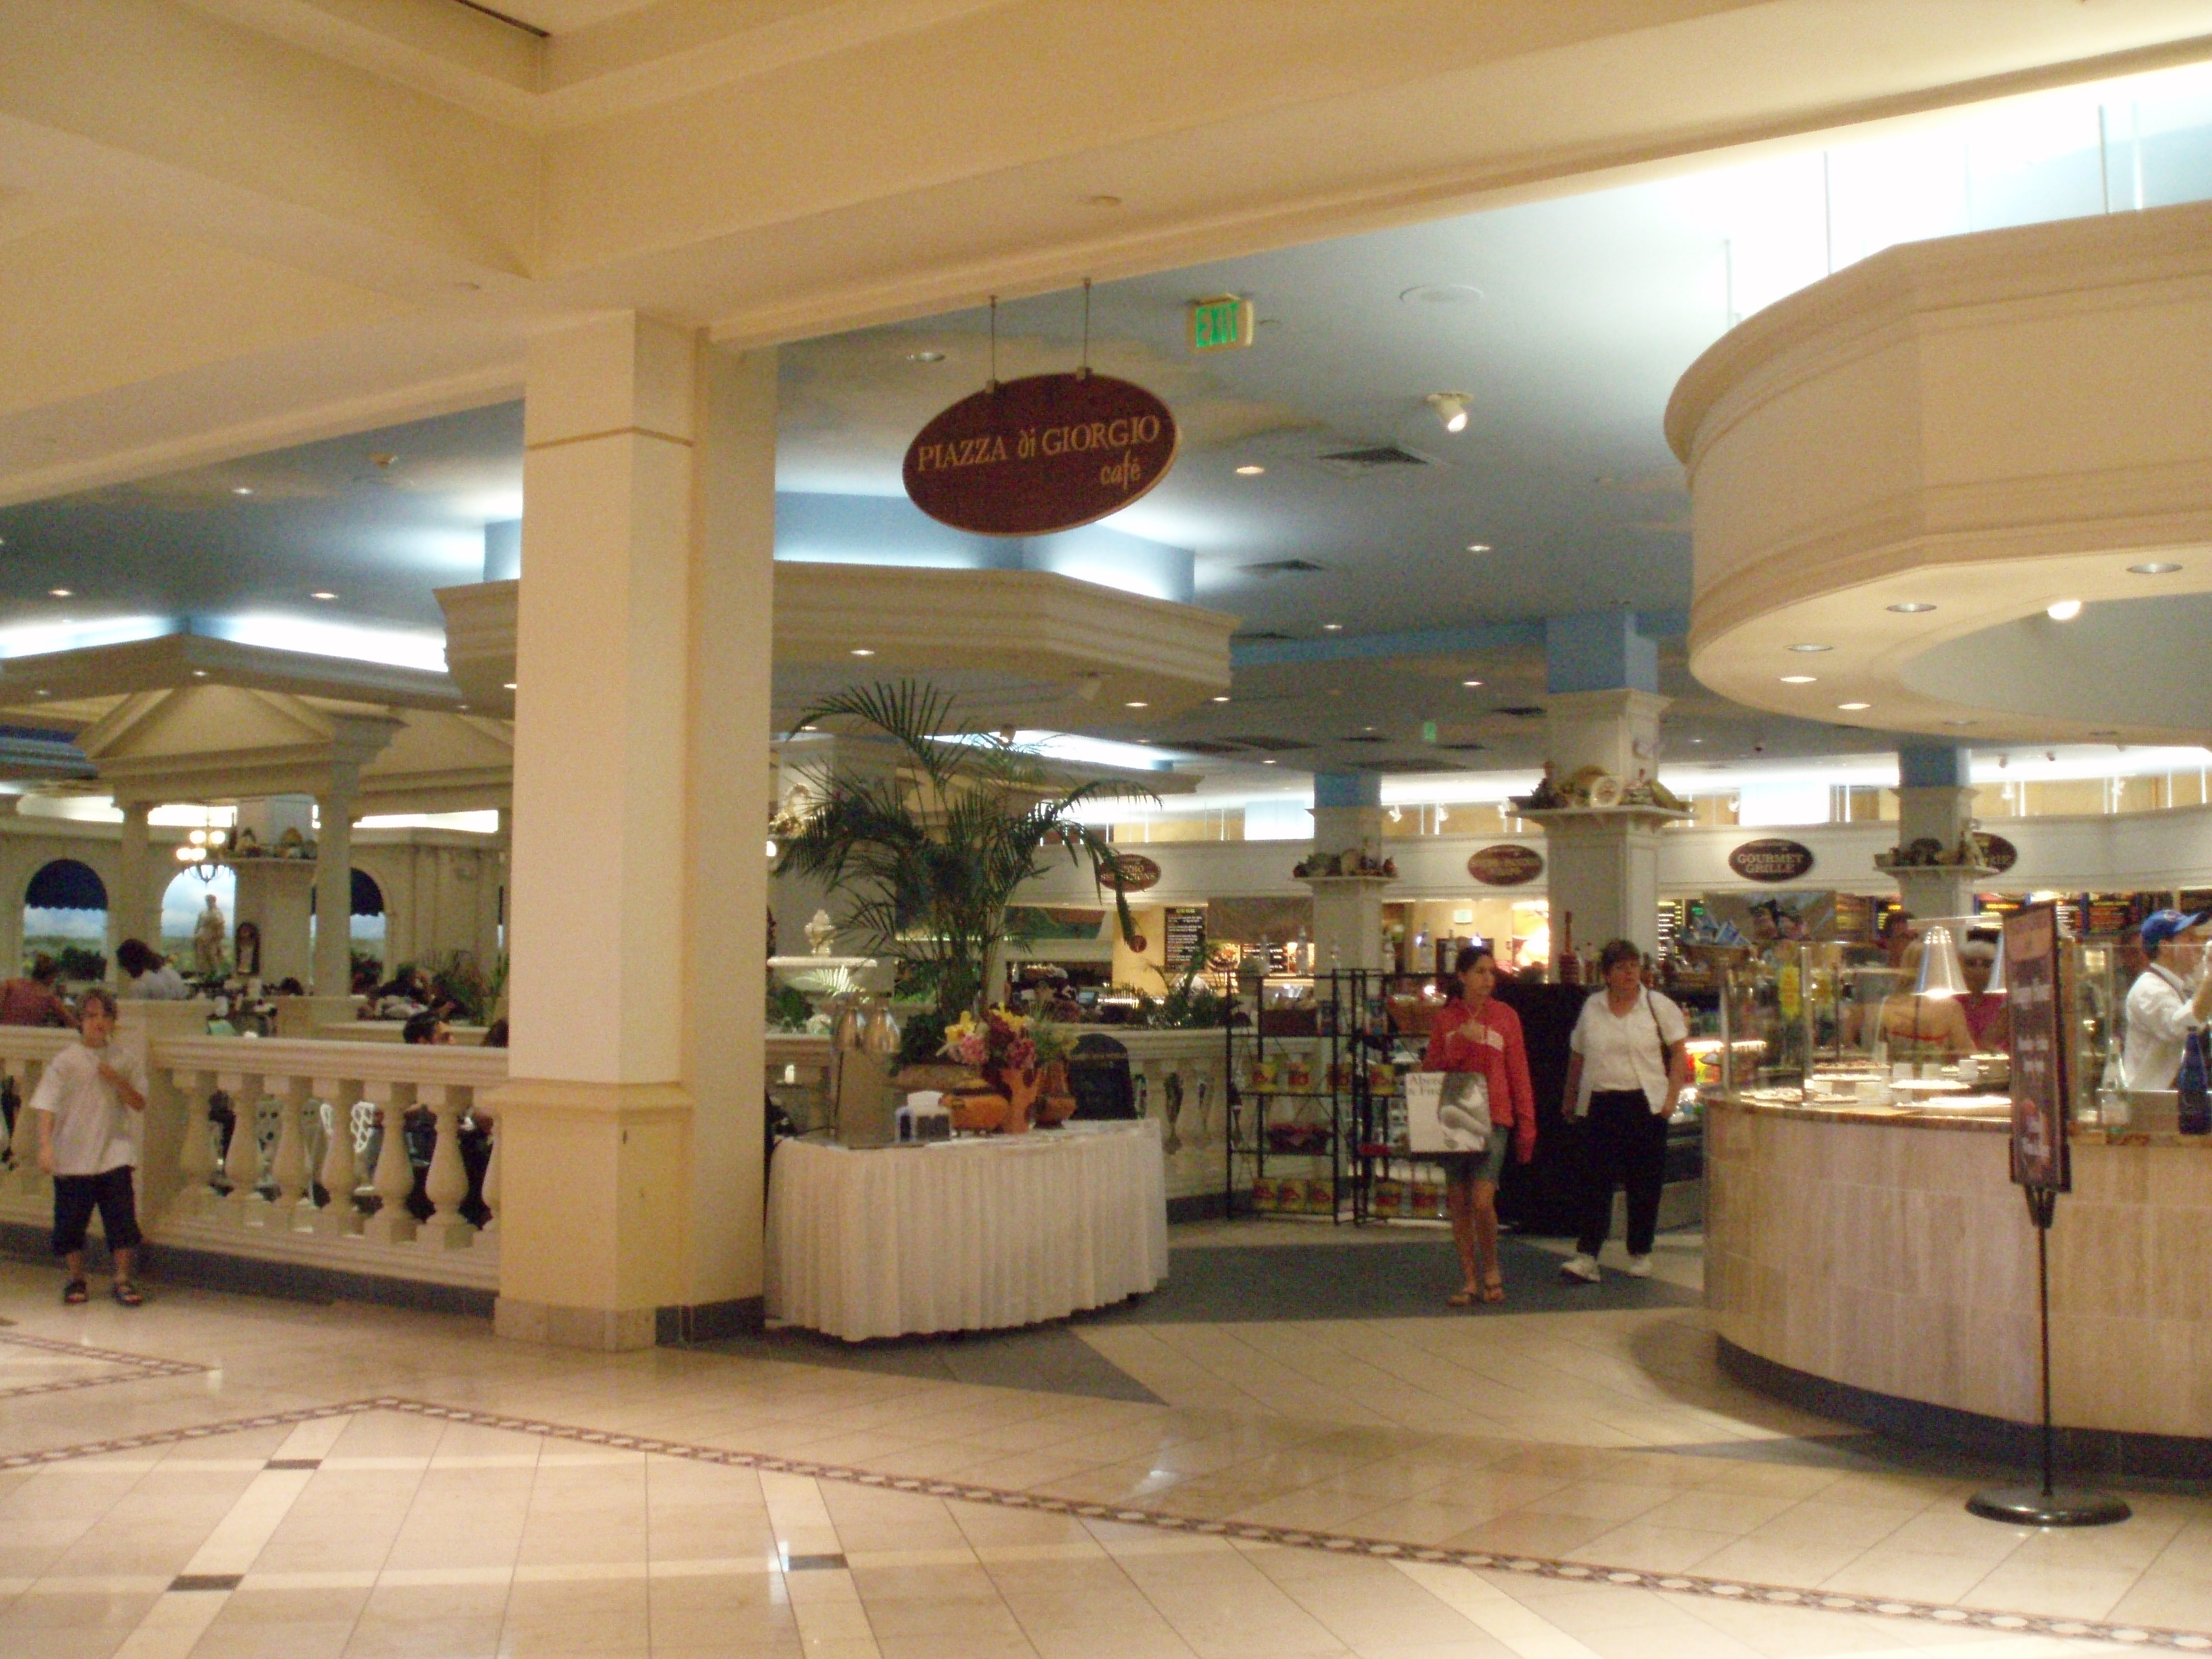 Restaurantes em shoppings – Parte 3, Galleria Mall (Fort Lauderdale)